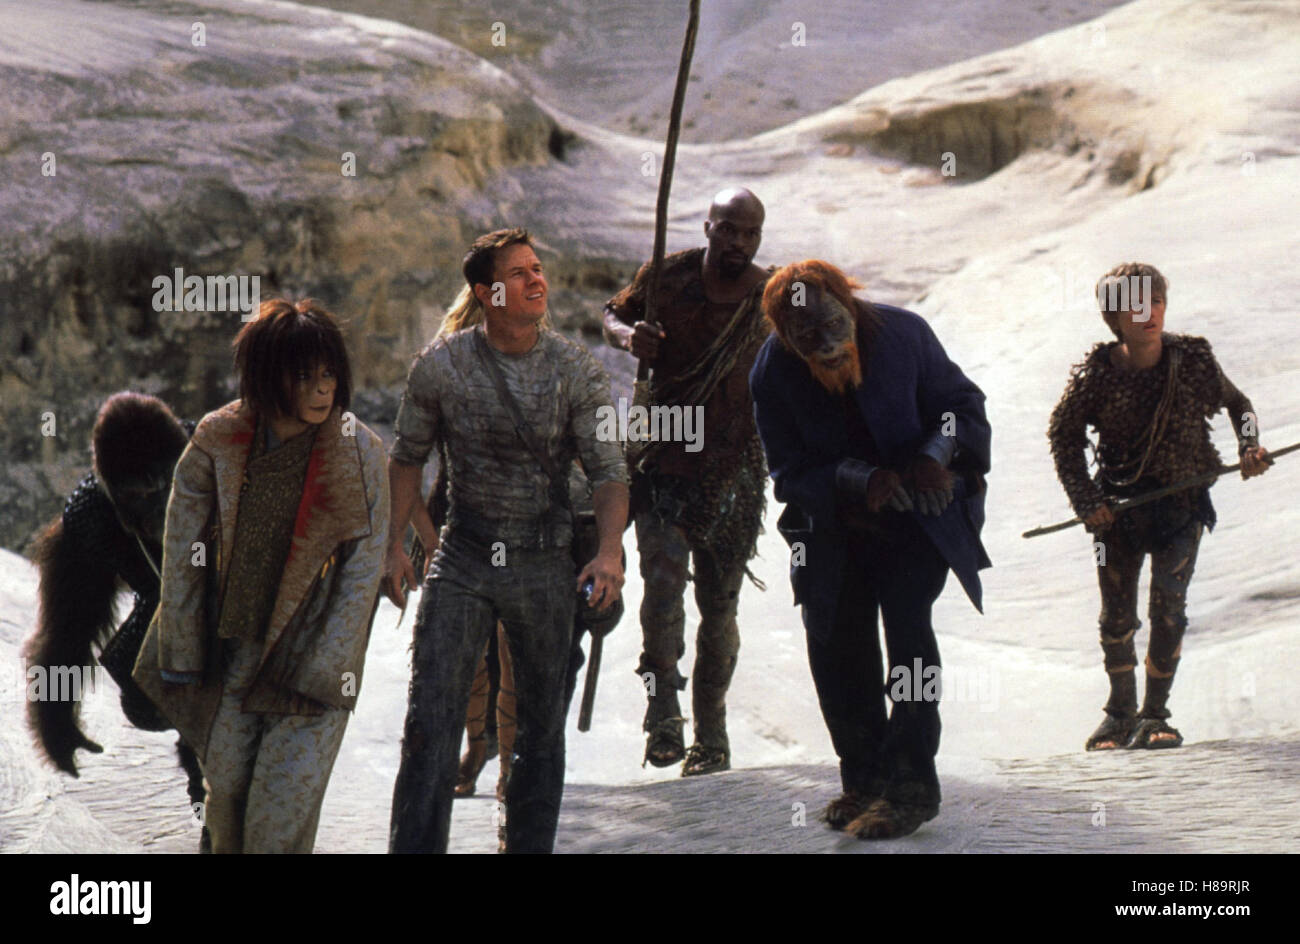 Planet der Affen, (PLANET OF THE APES) USA 2001, Regie: Tim Burton, HELENA BONHAM CARTER, MARK WAHLBERG, PAUL GIAMATTI Stock Photo